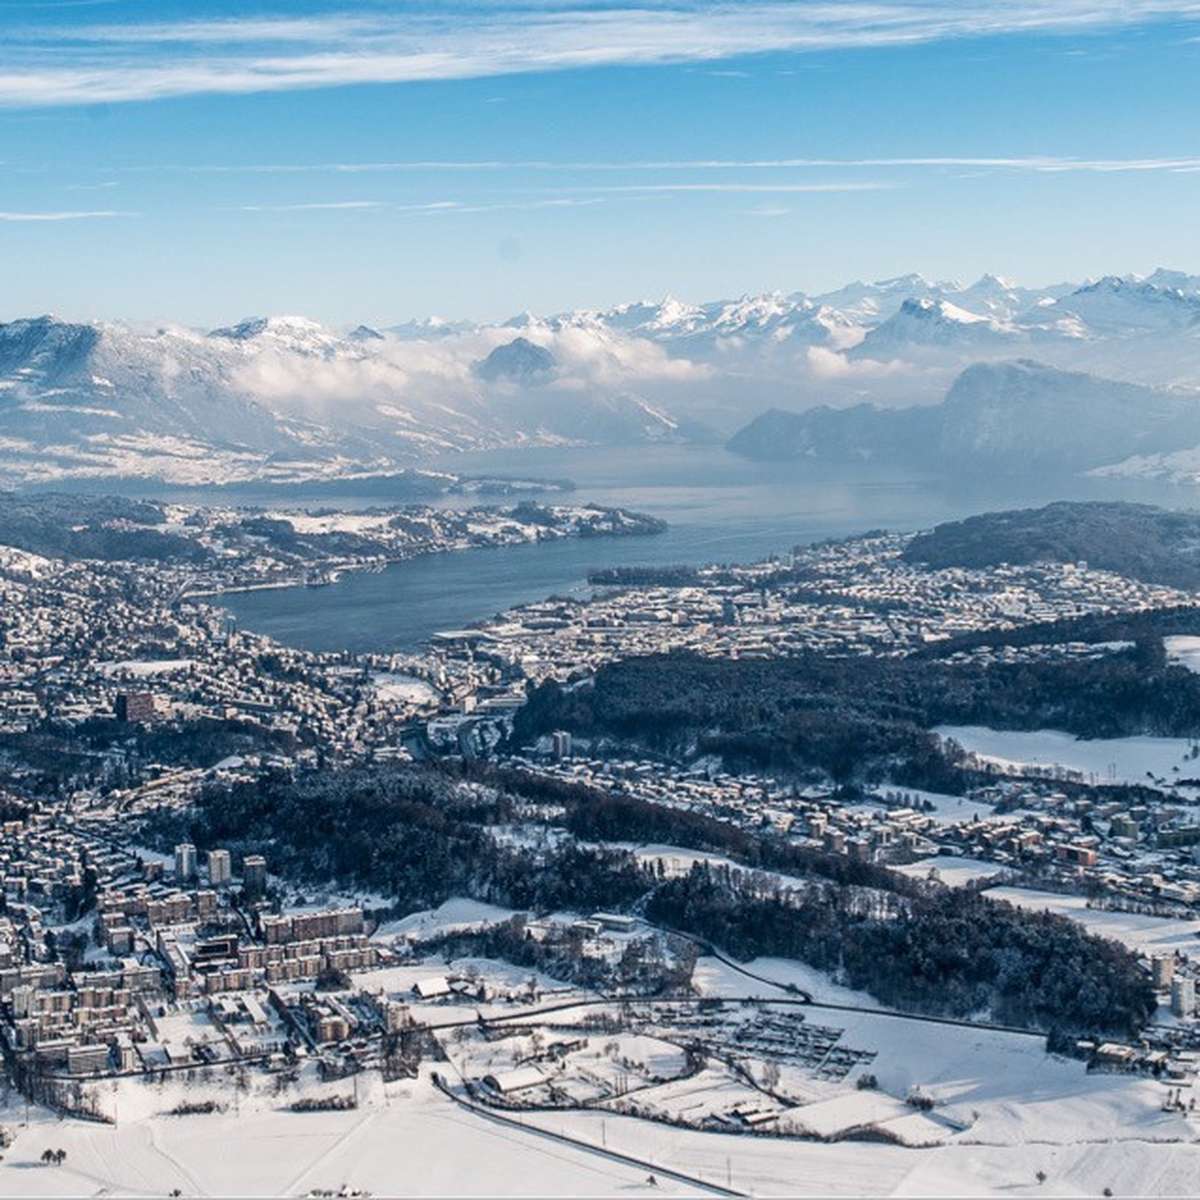 Studi-Olympiade soll in Luzern den Tourismus beflügeln